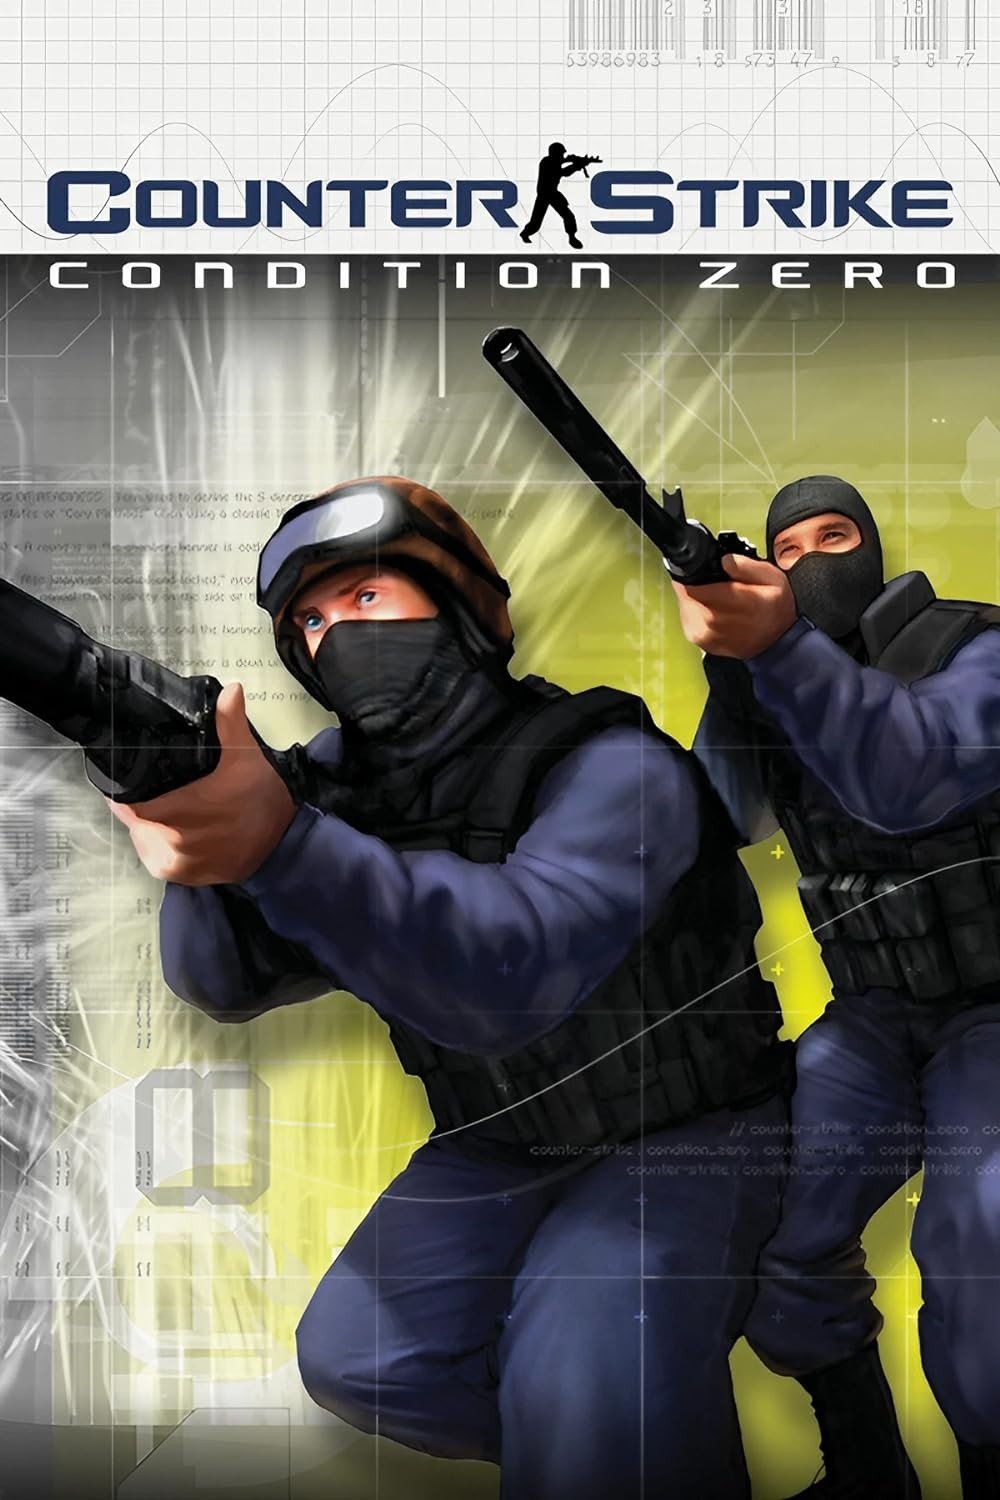 Counter Strike - Condition Zero hosting